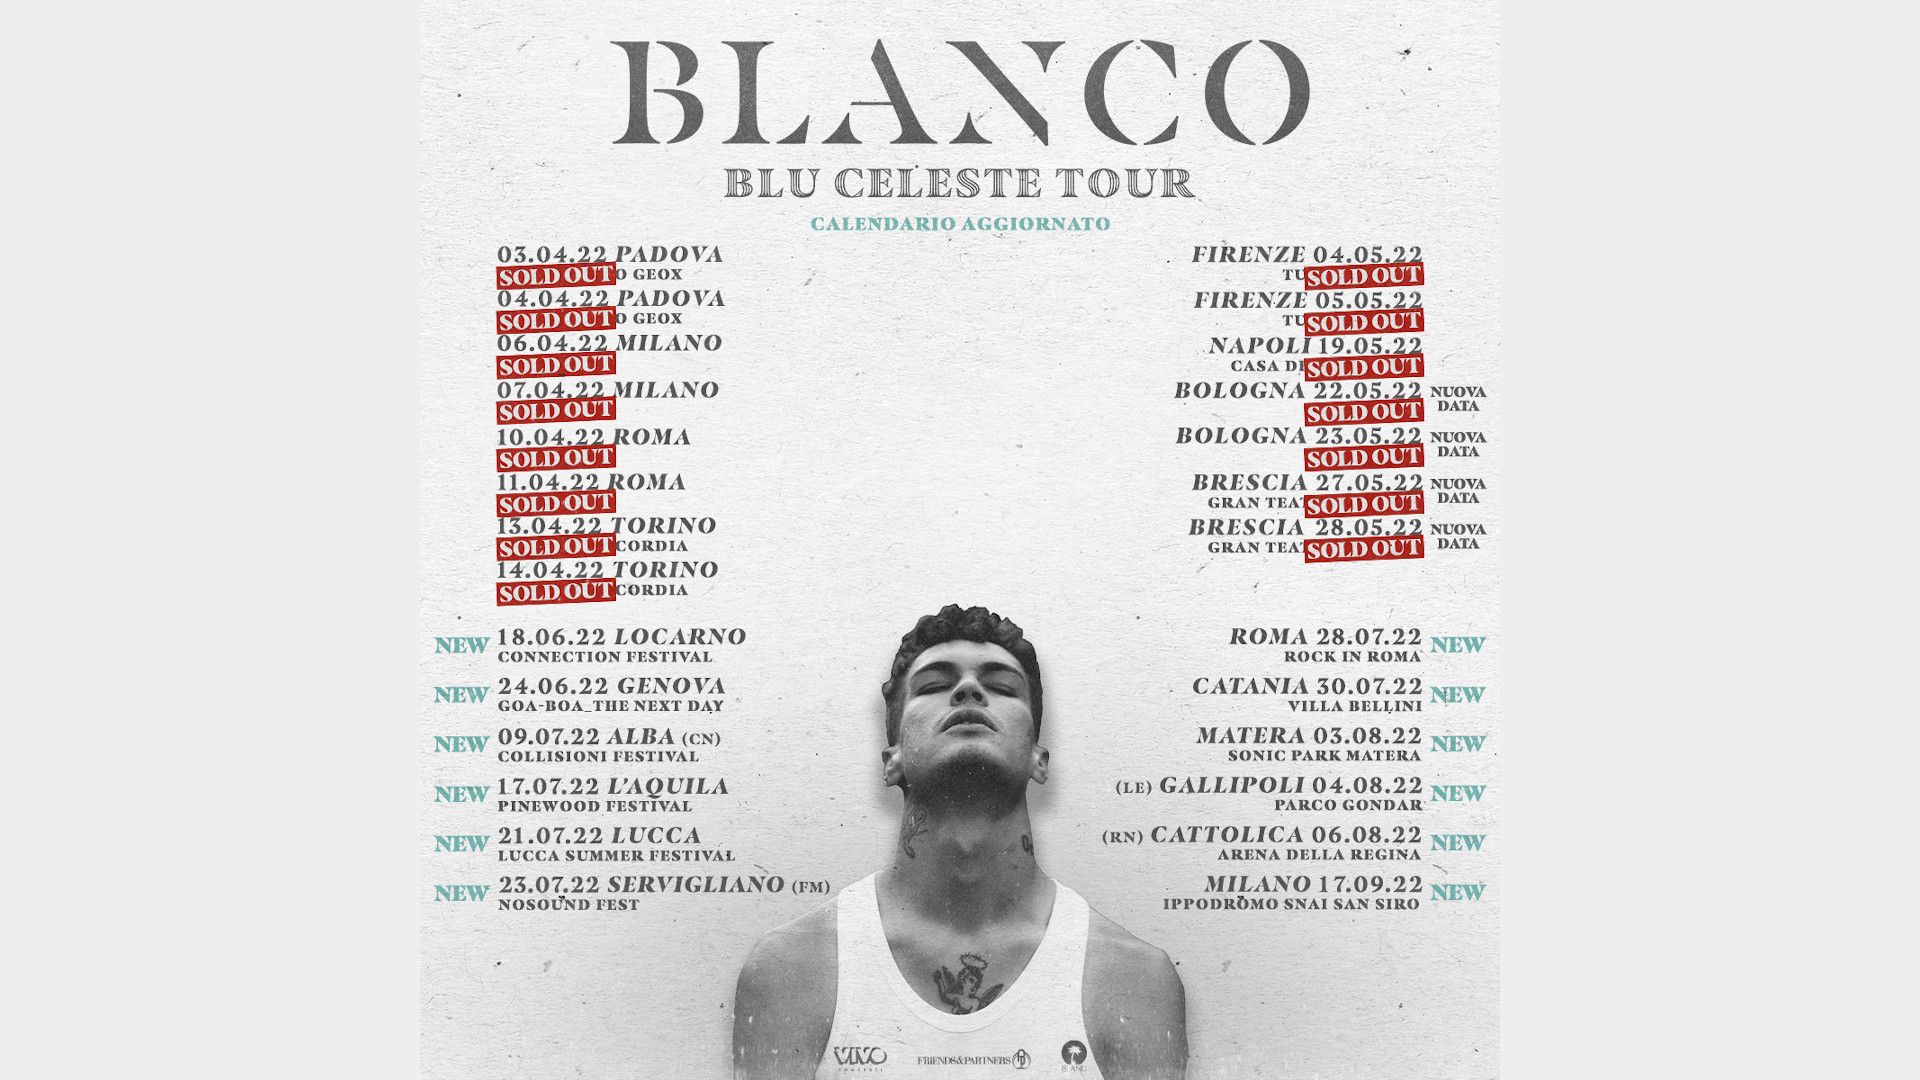 Blu Celeste Tour Blanco